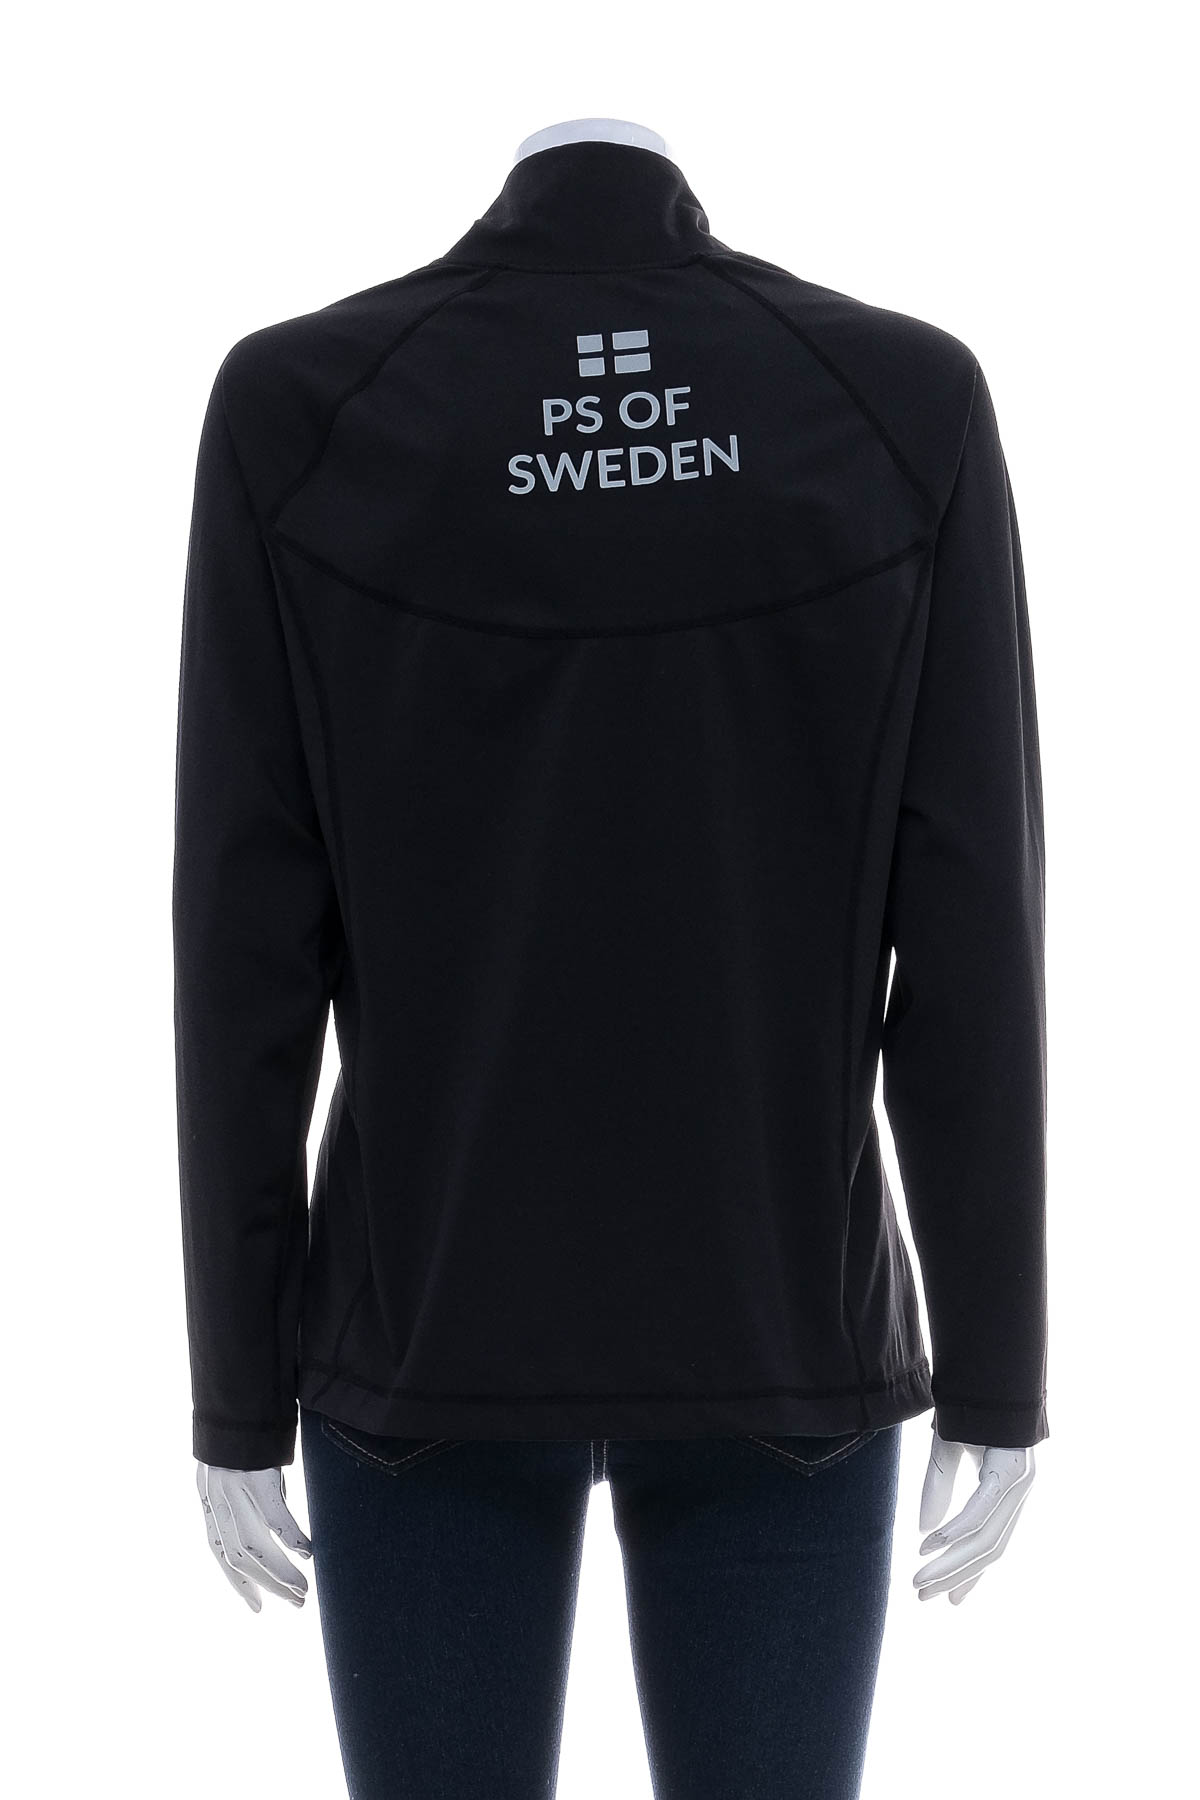 Women's sport blouse - PS of Sweden - 1